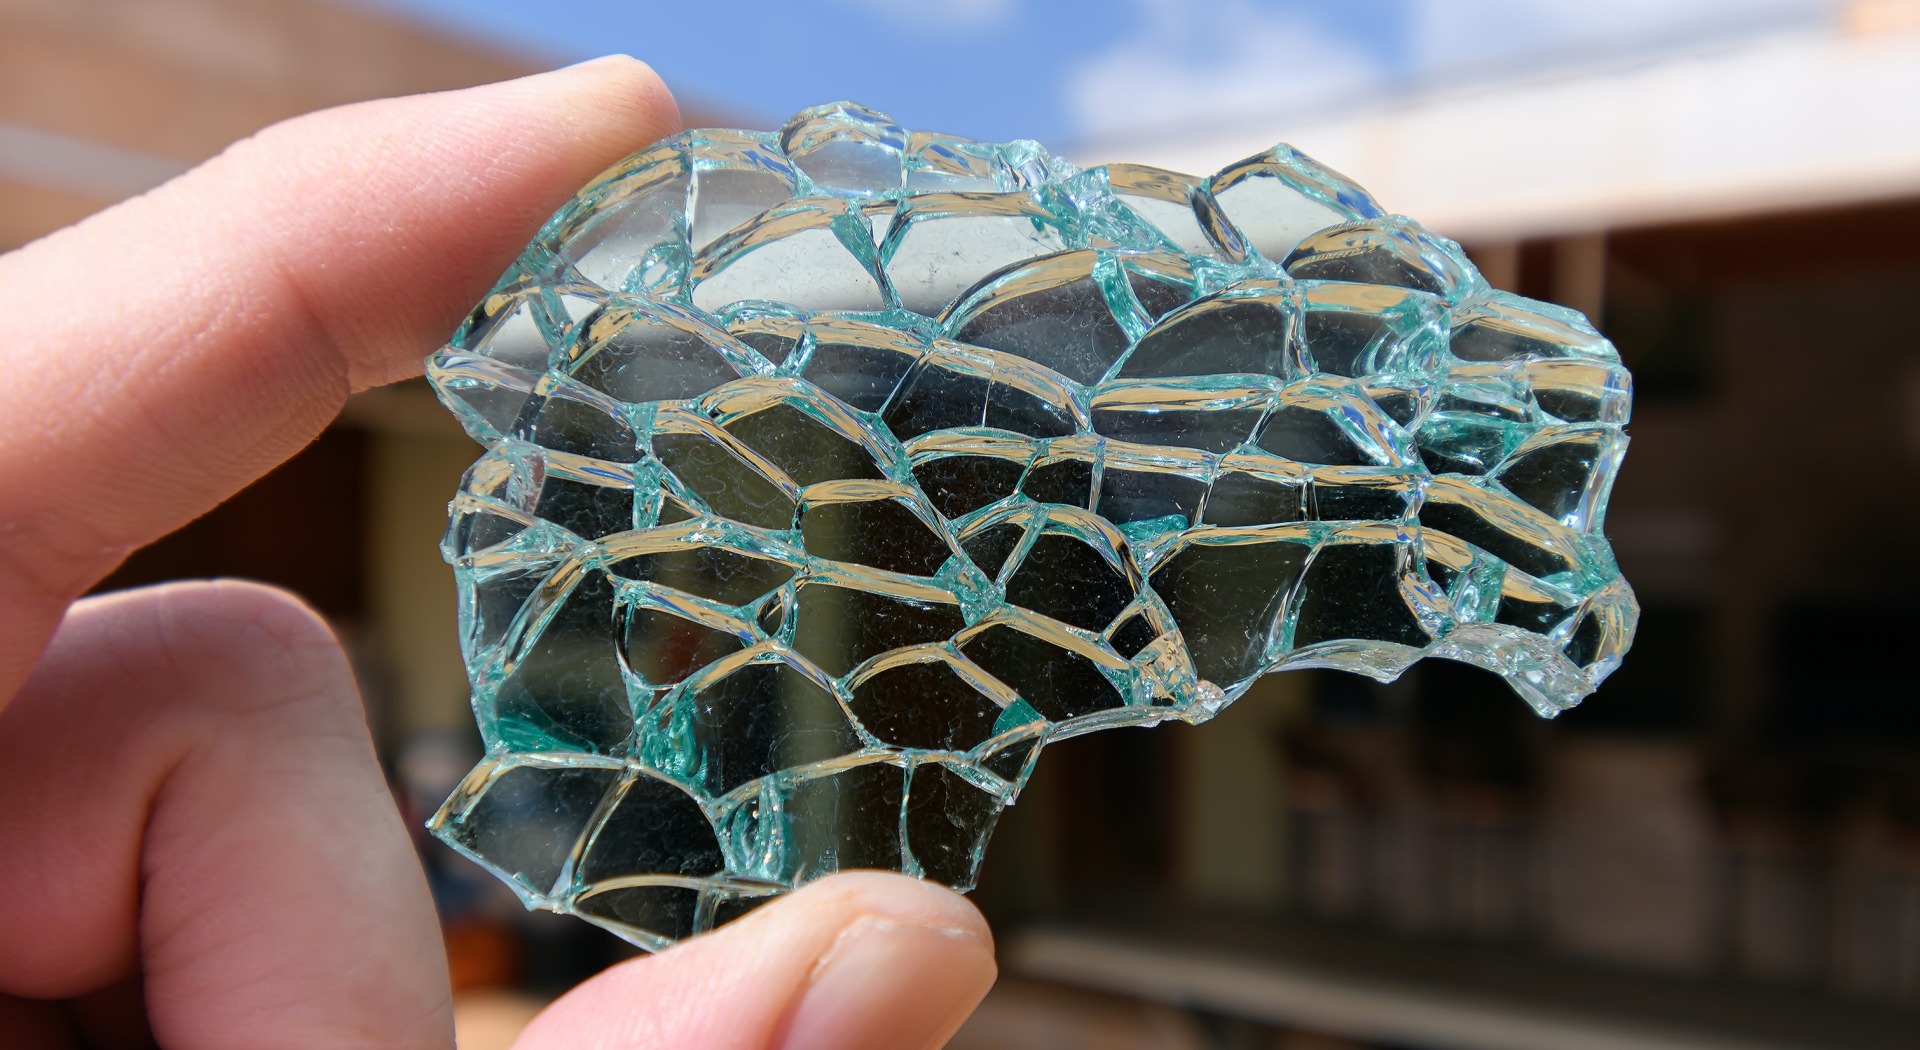 Broken tempered glass